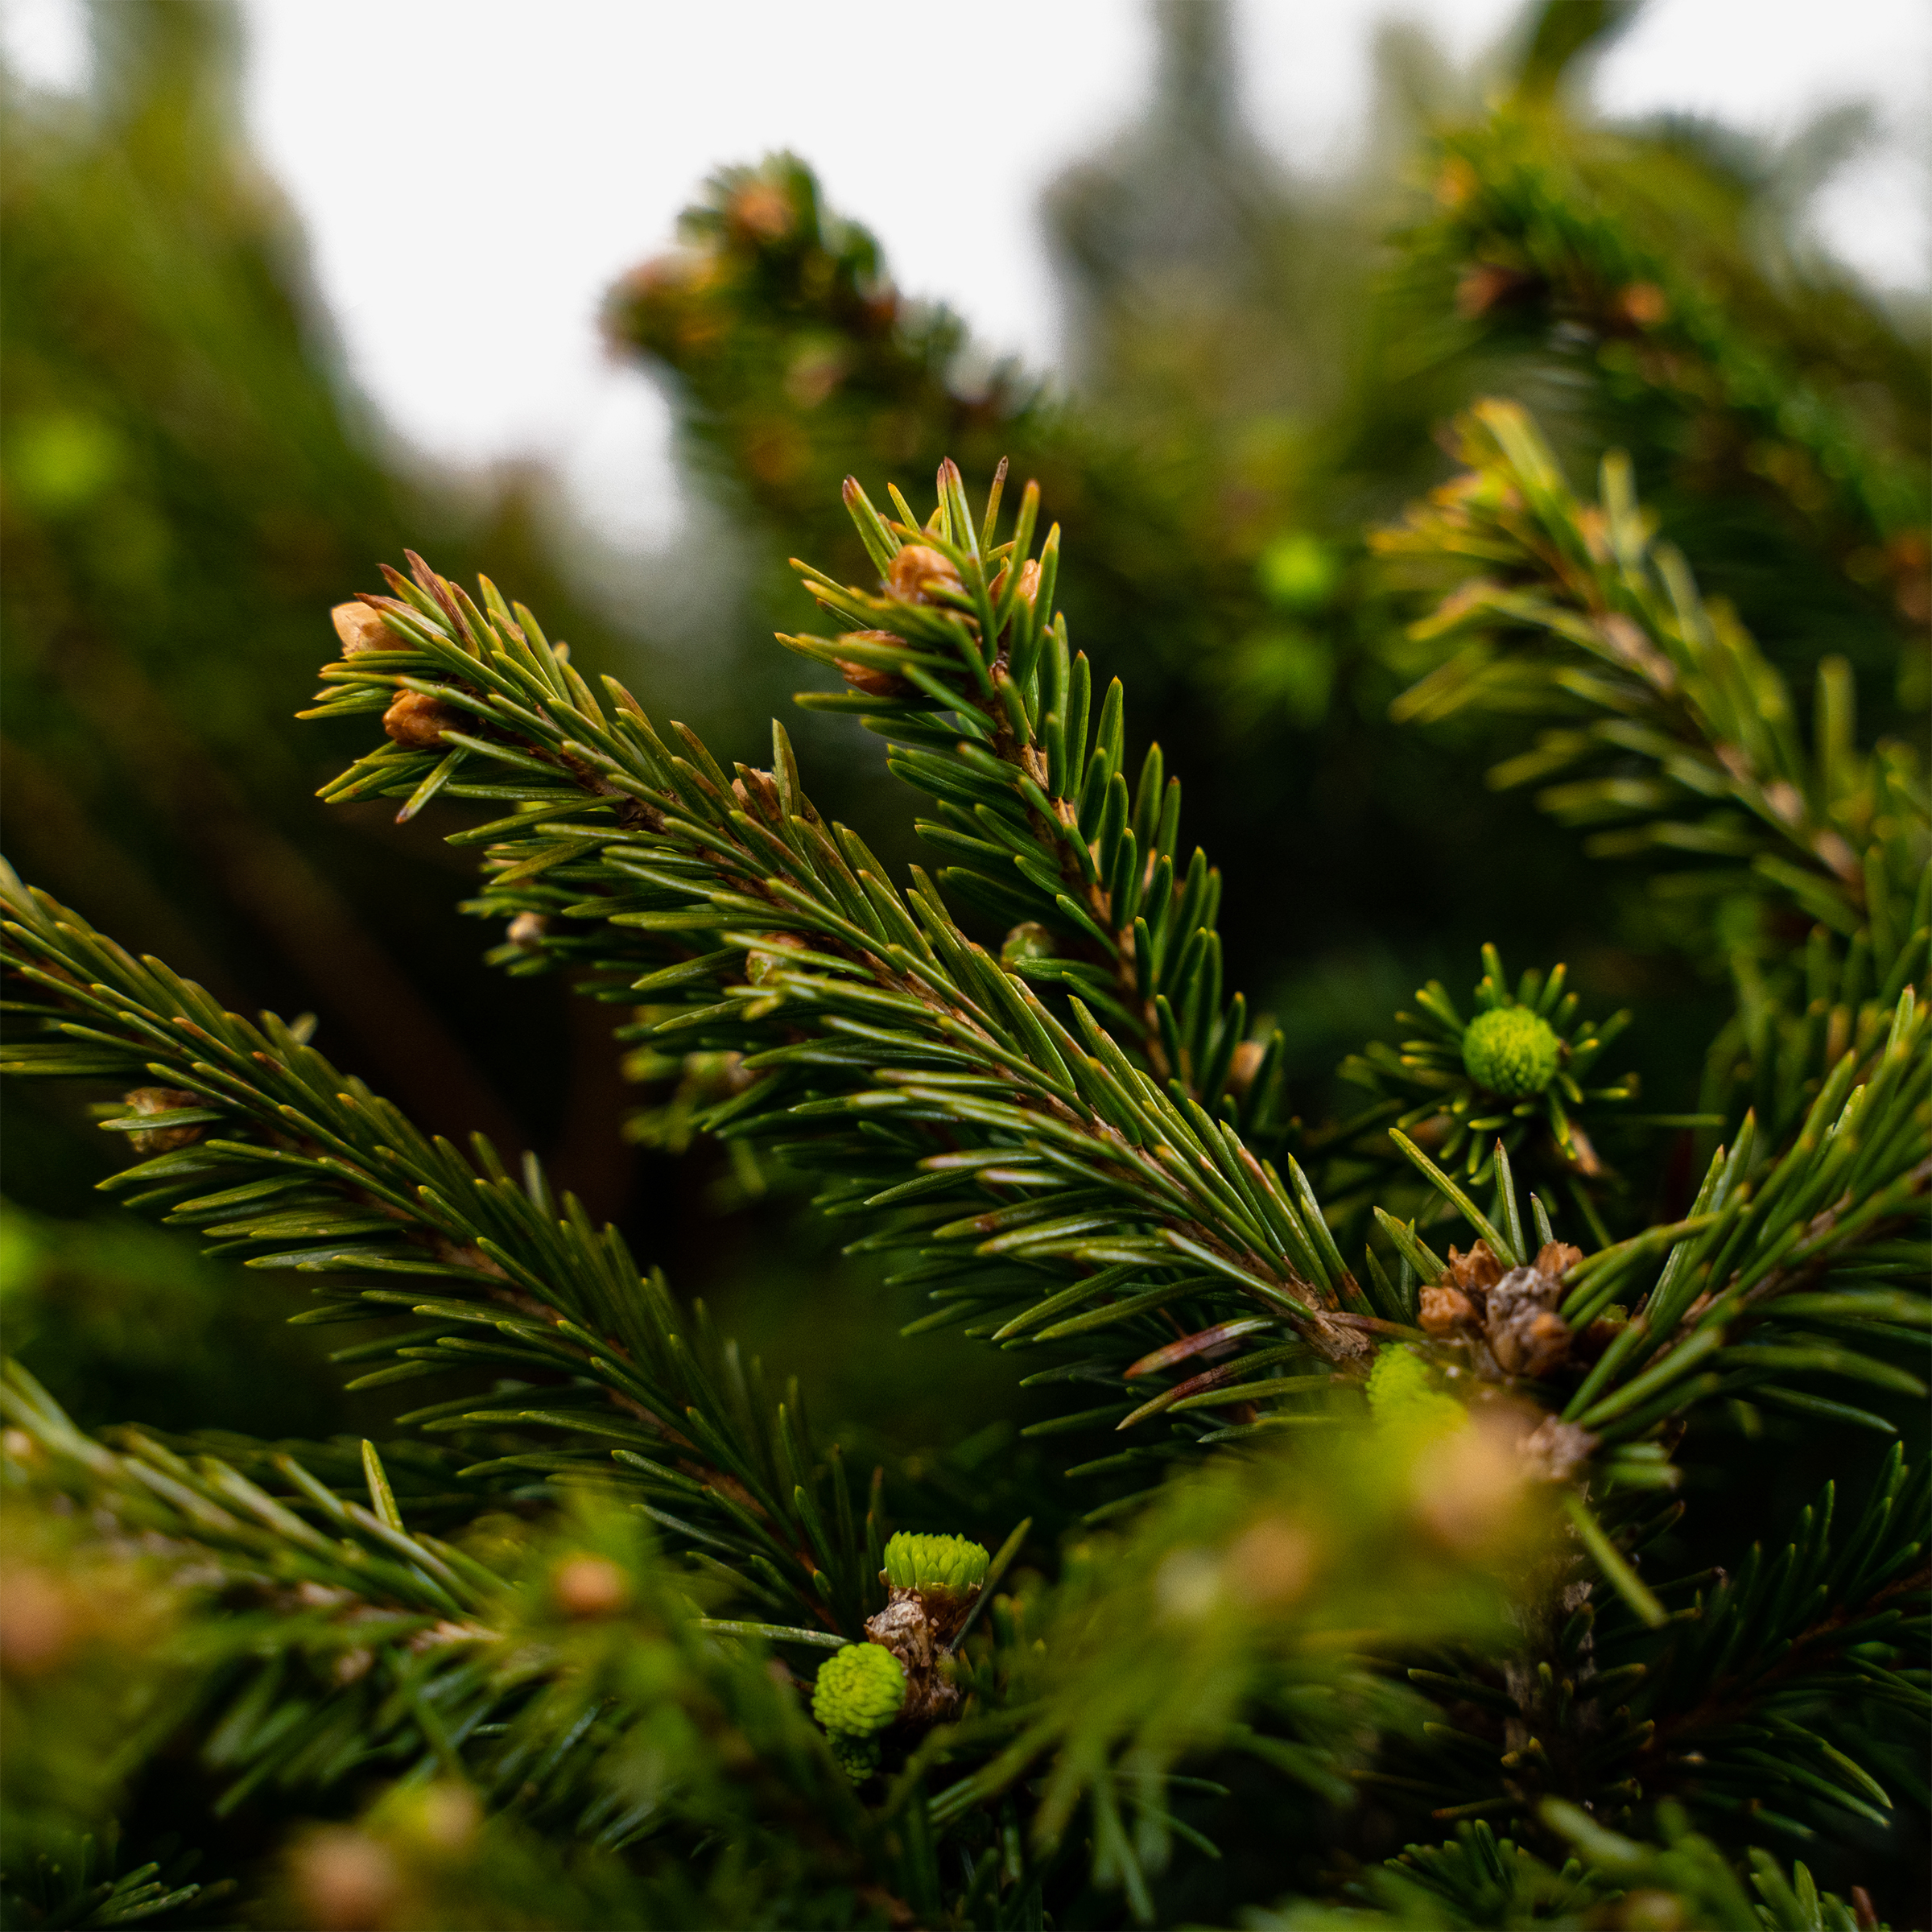 Dwarf Norway Spruce